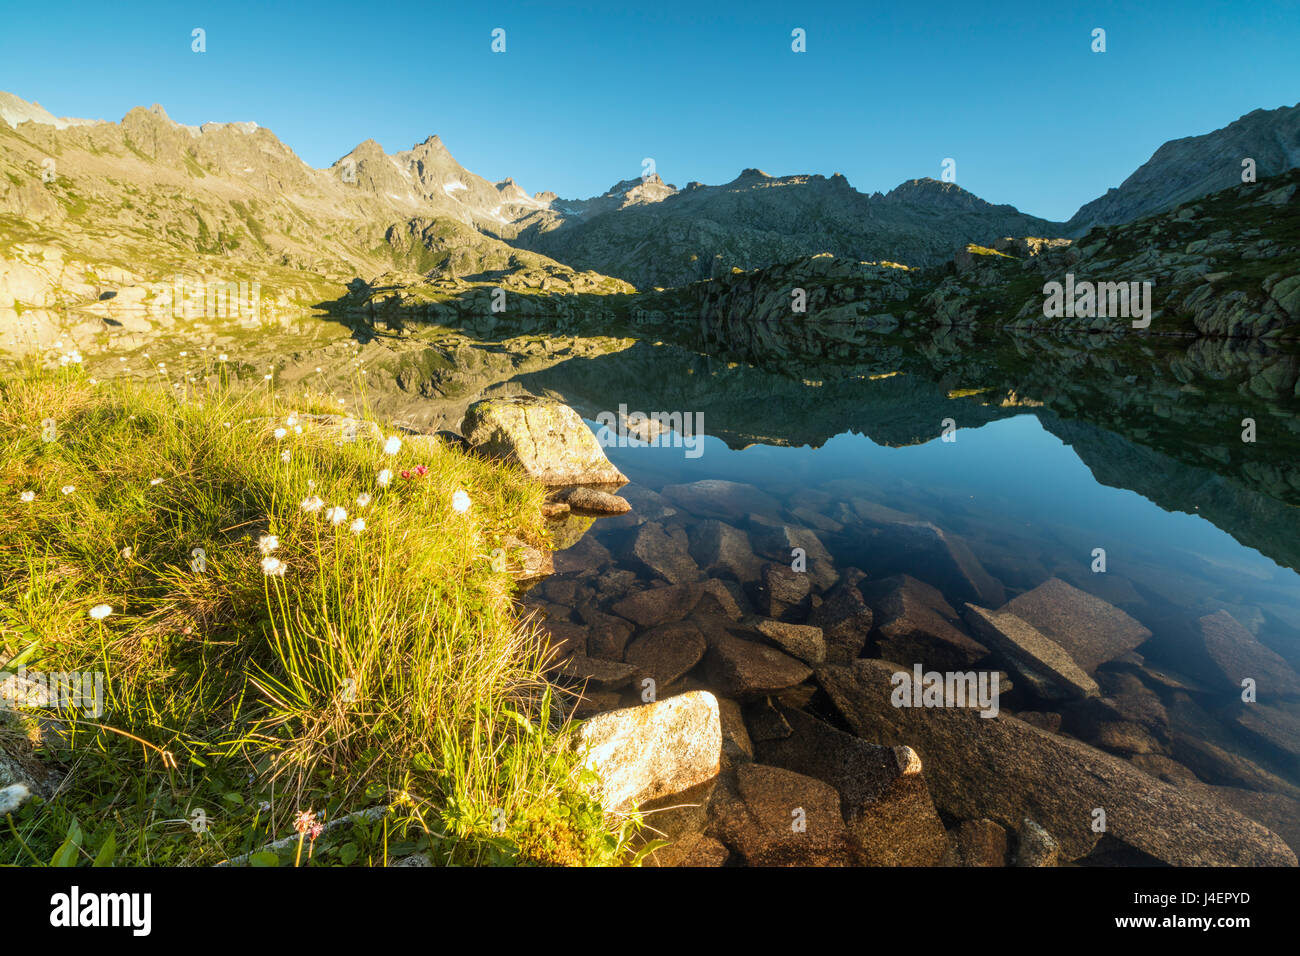 The rocky peaks reflected in Lago Nero at dawn, Cornisello, Pinzolo, Brenta Dolomites, Trentino-Alto Adige, Italy, Europe Stock Photo